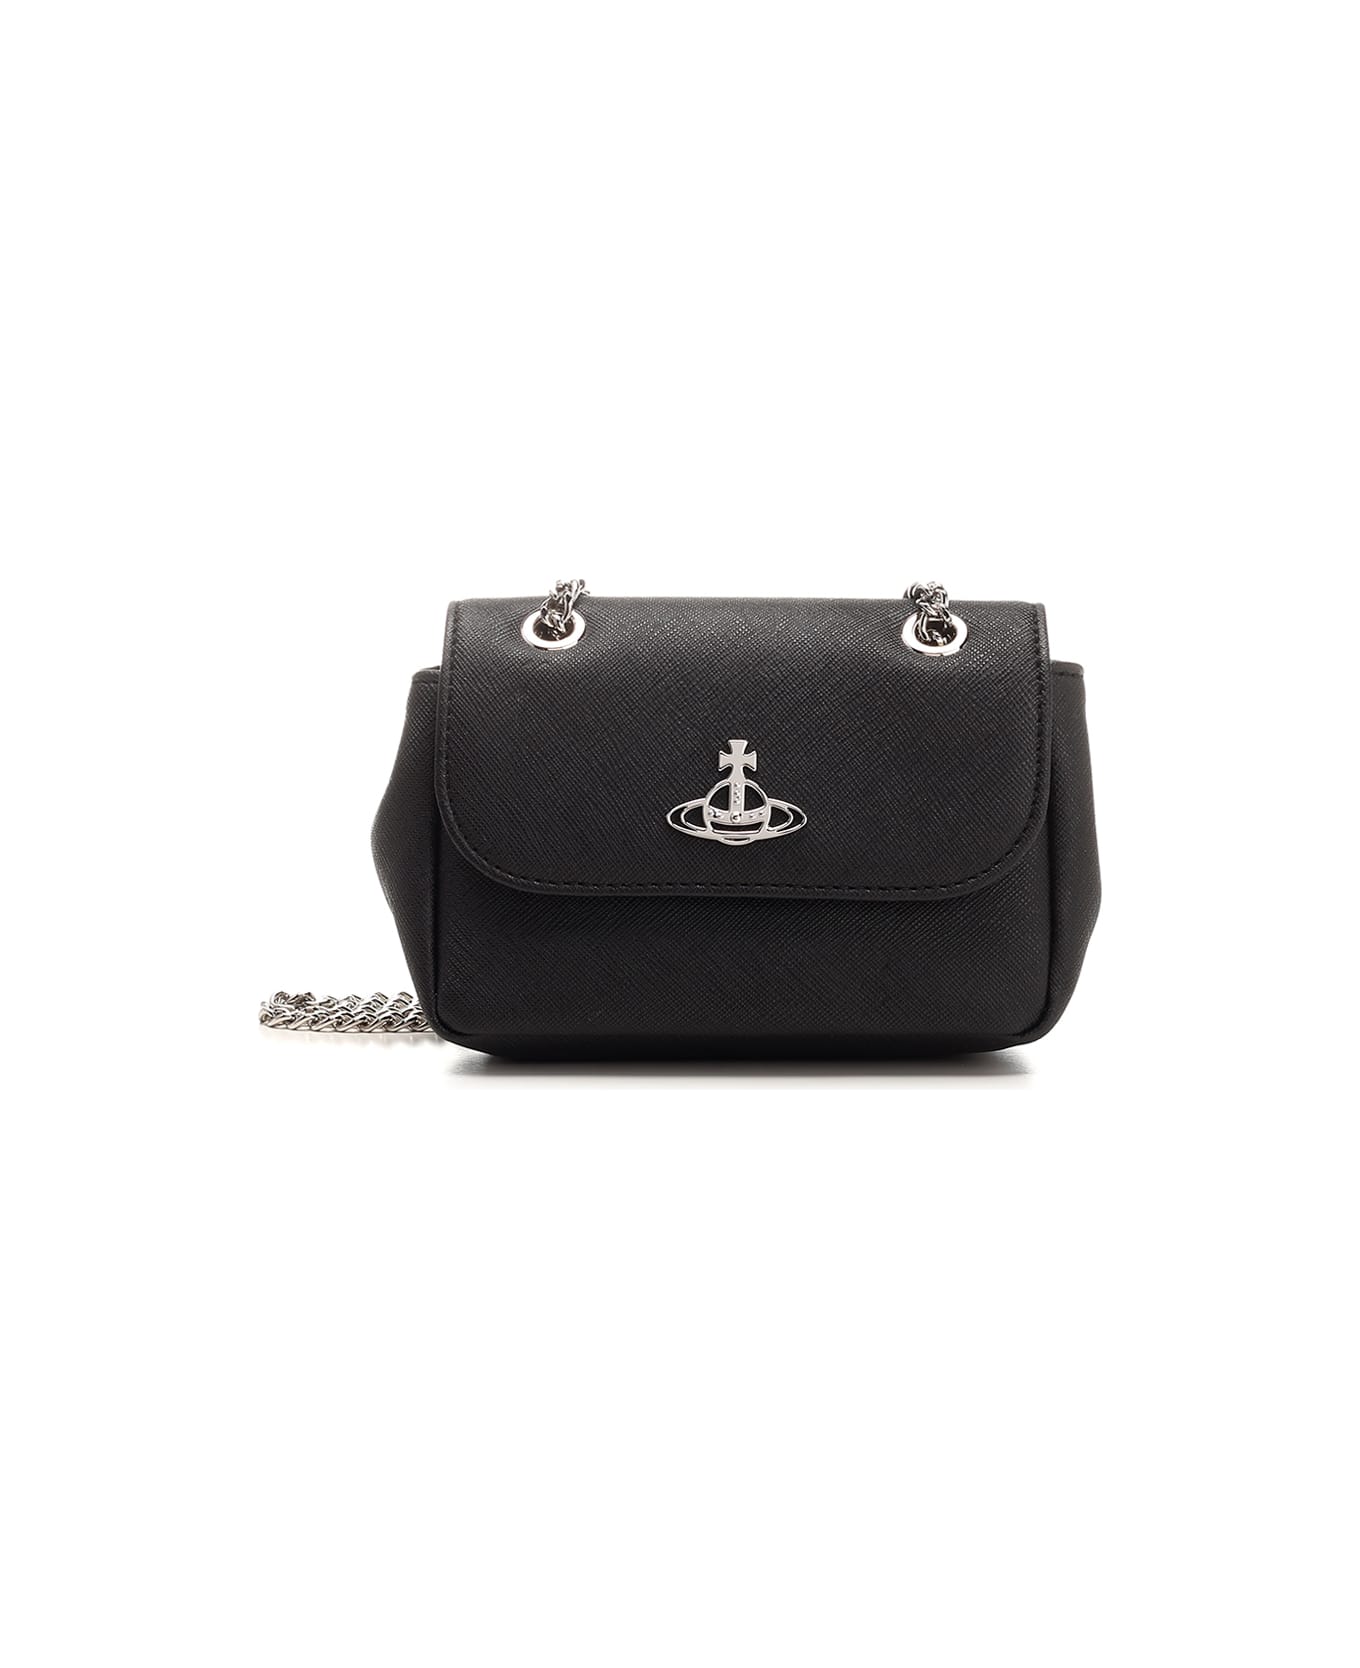 Vivienne Westwood Shoulder Bag With Chain - Nero 財布